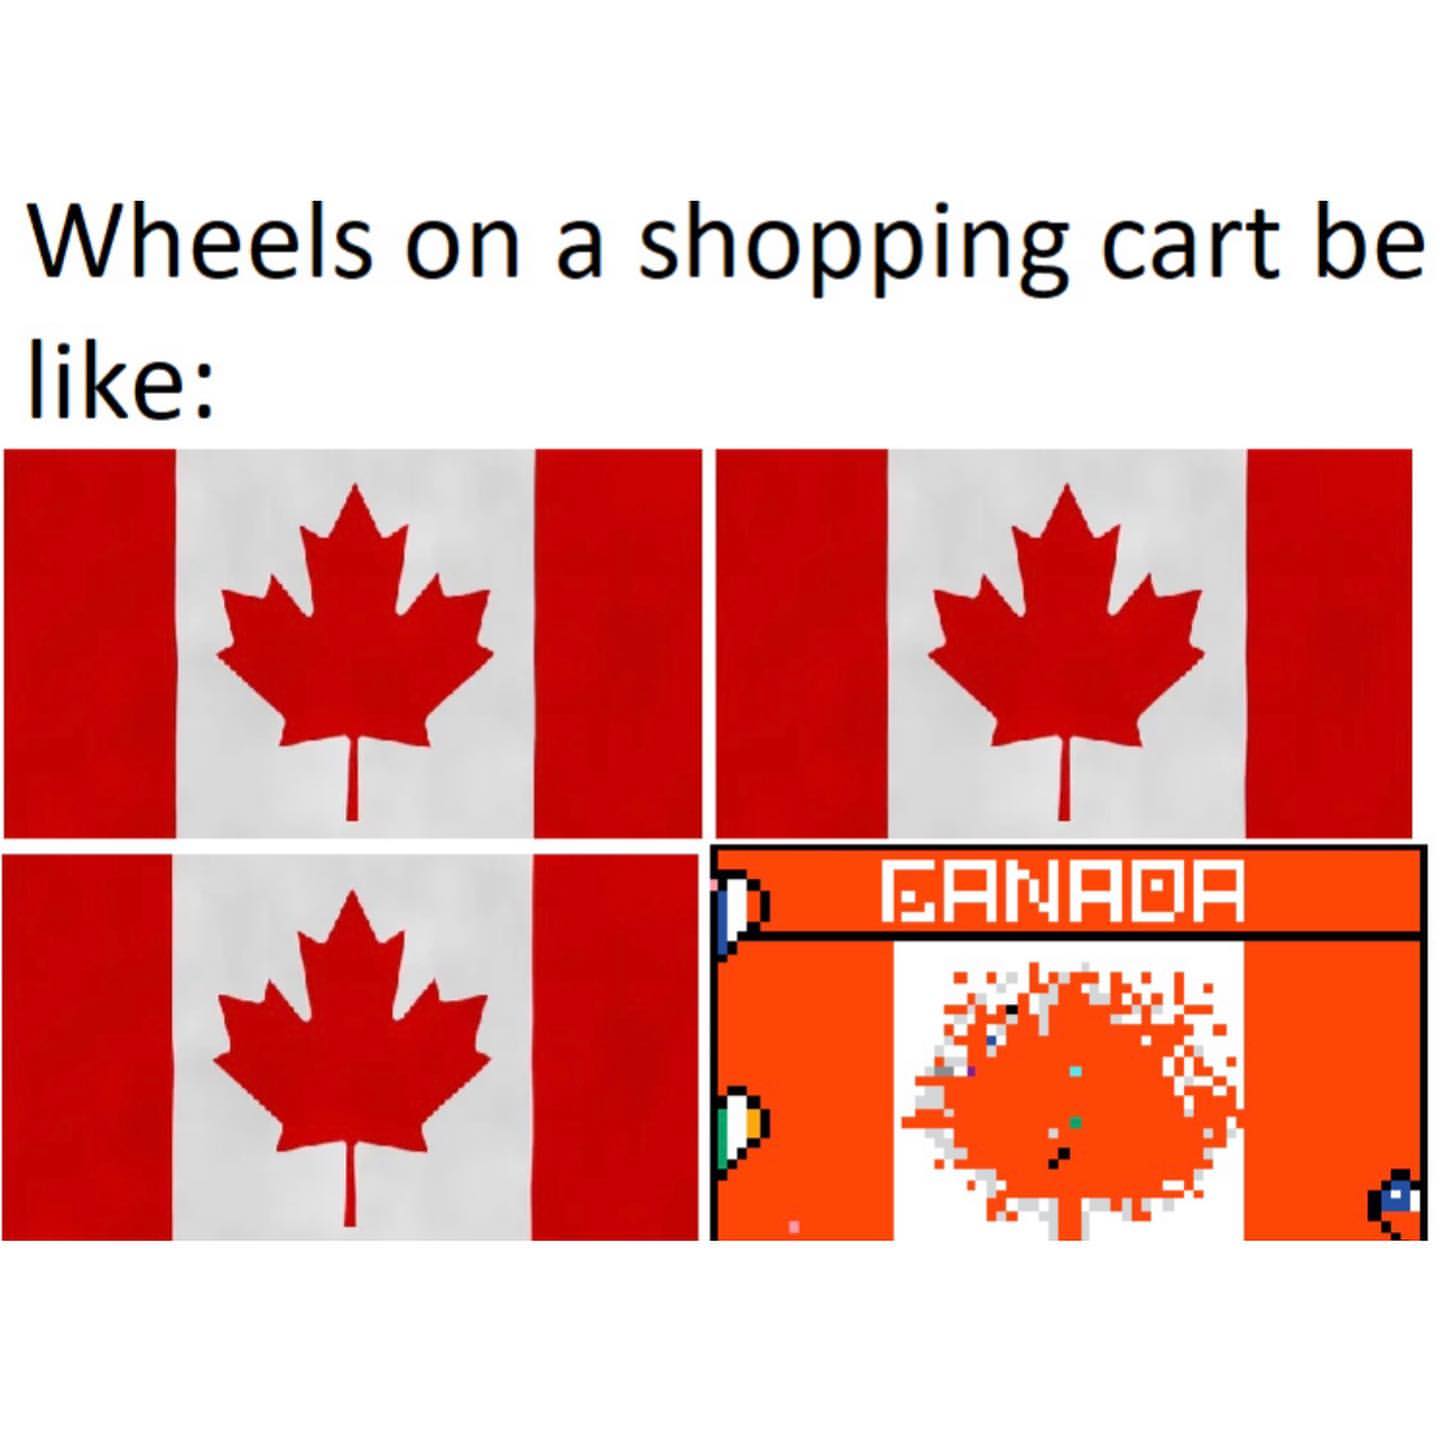 Wheels on a shopping cart be like: